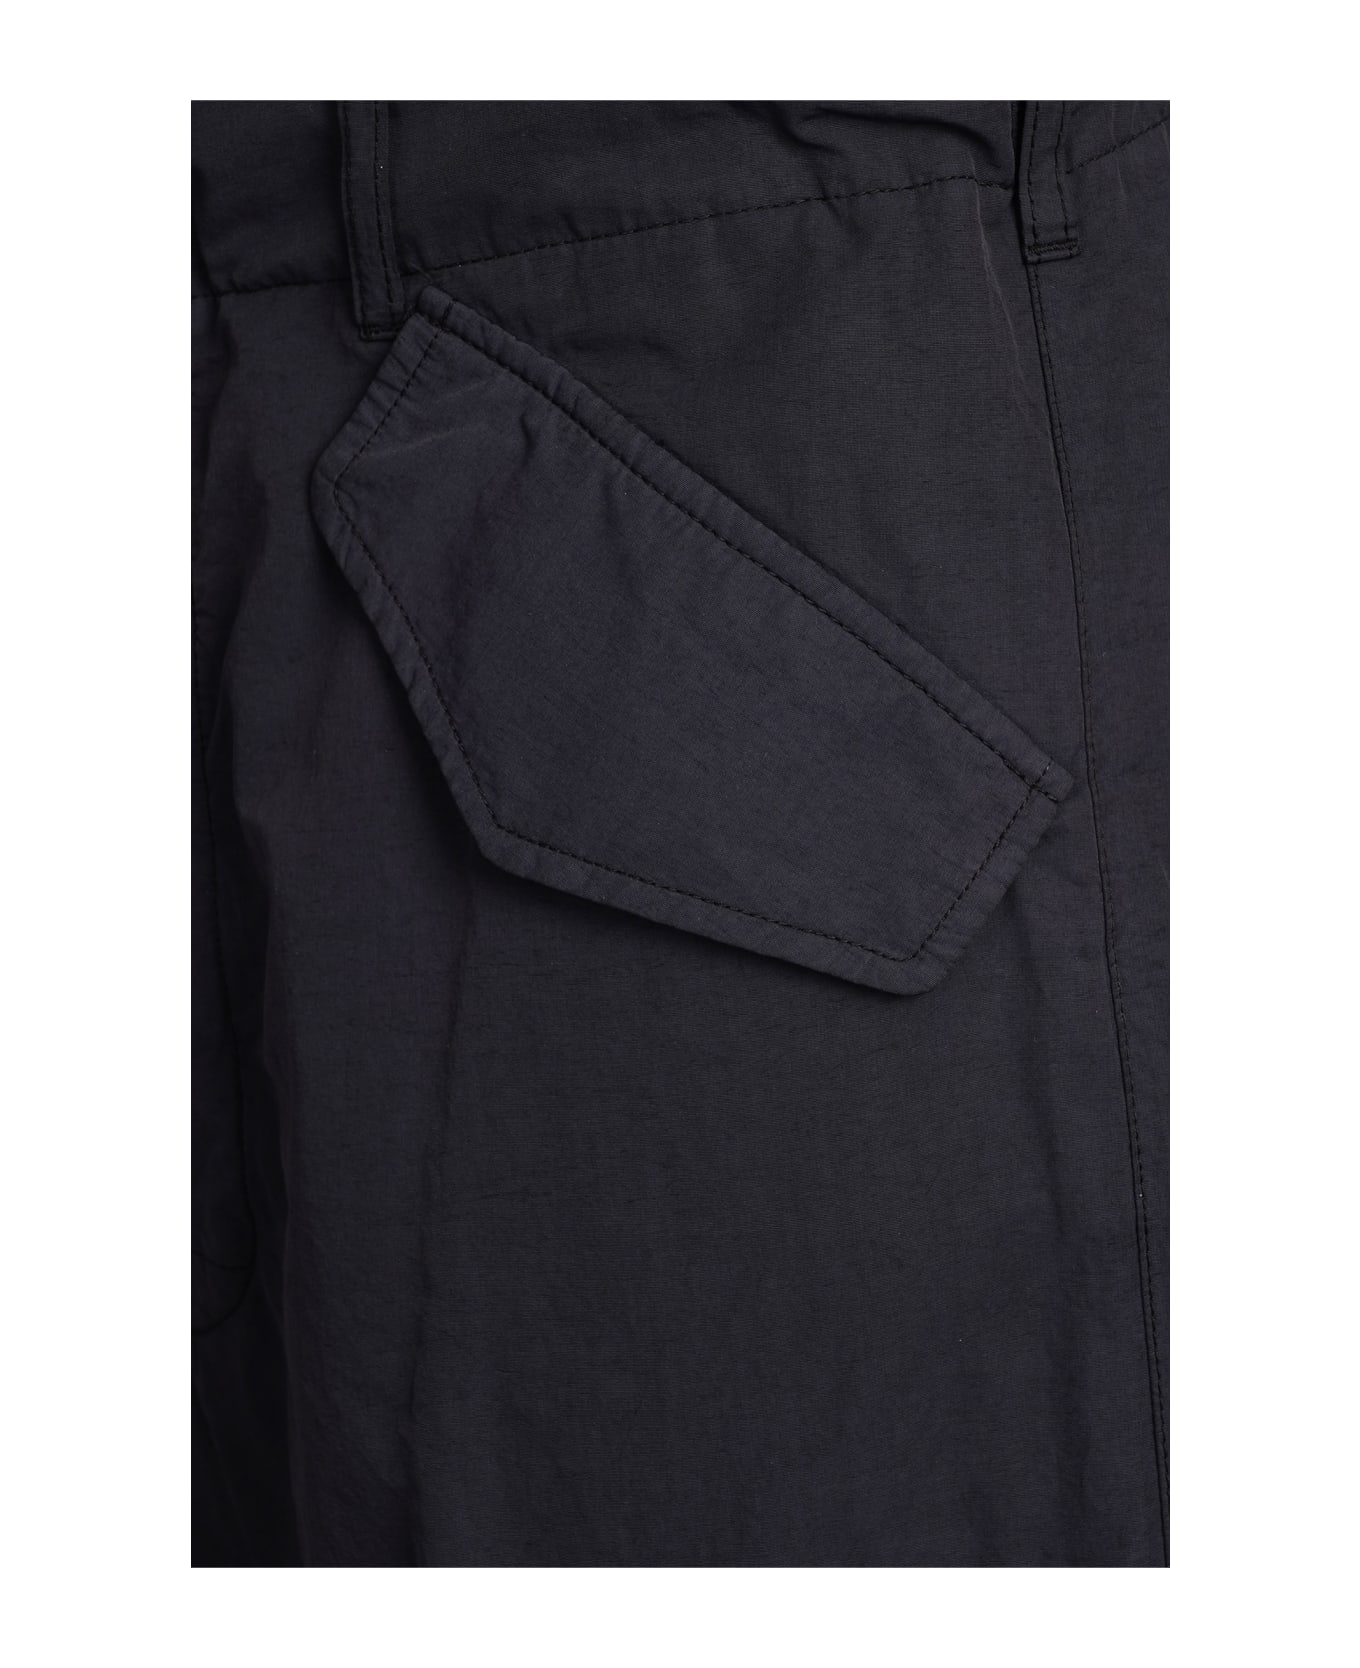 Laneus Pants In Black Cotton - black